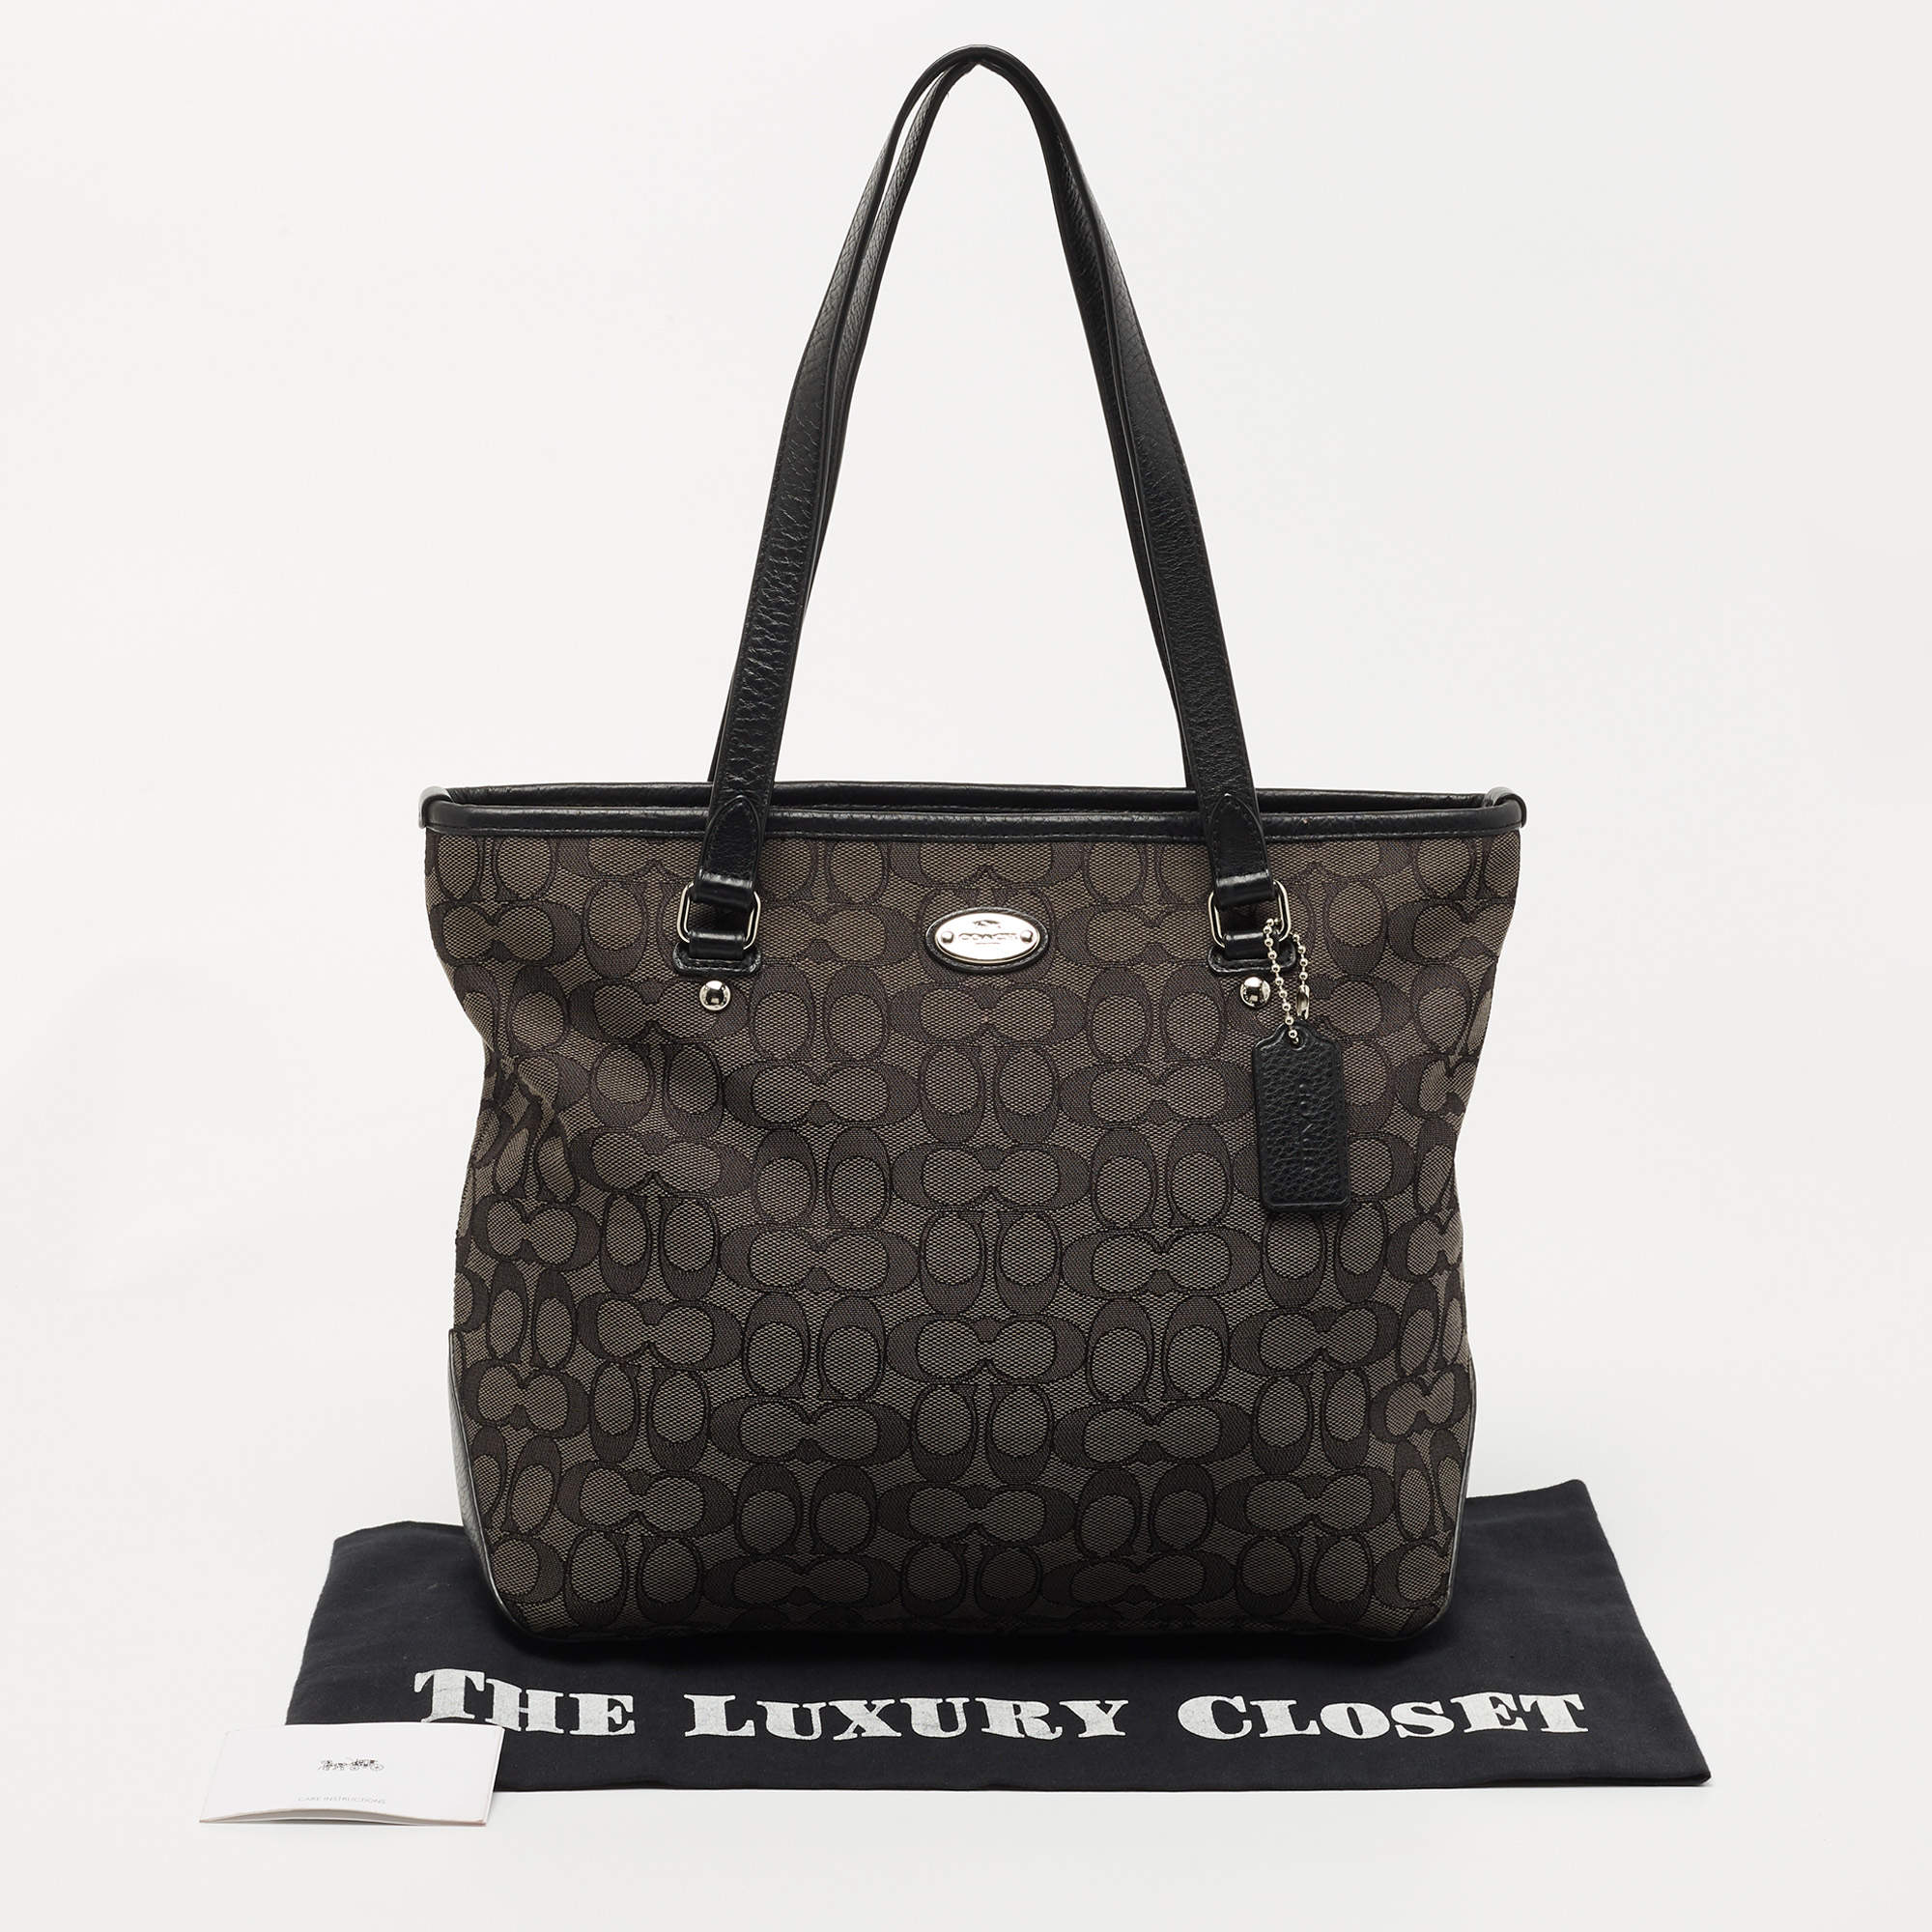 Black and Gray Coach Handbag Signature Pattern - Used | eBay